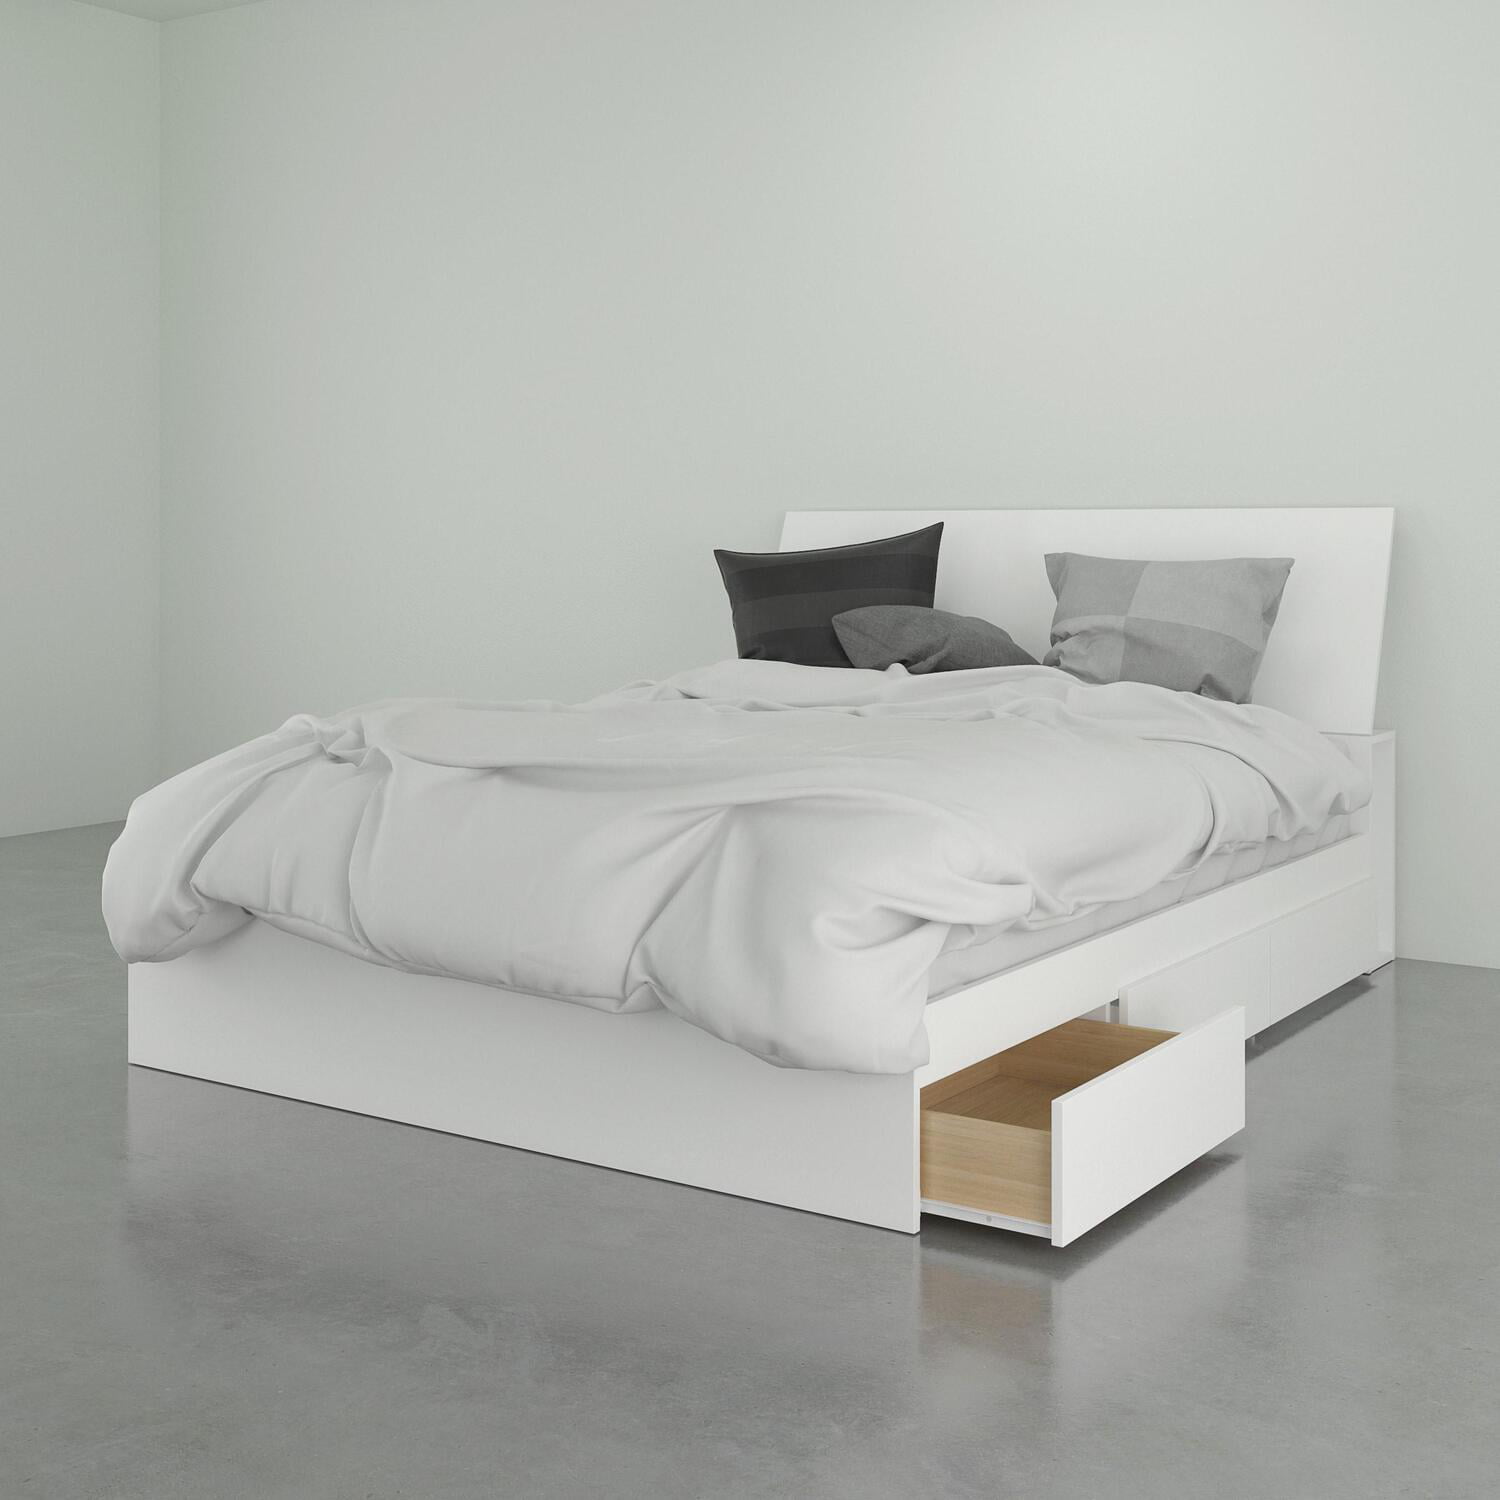 Nexera Queen Size Platform Bed Set, Queen Size Platform Bed Frame Set